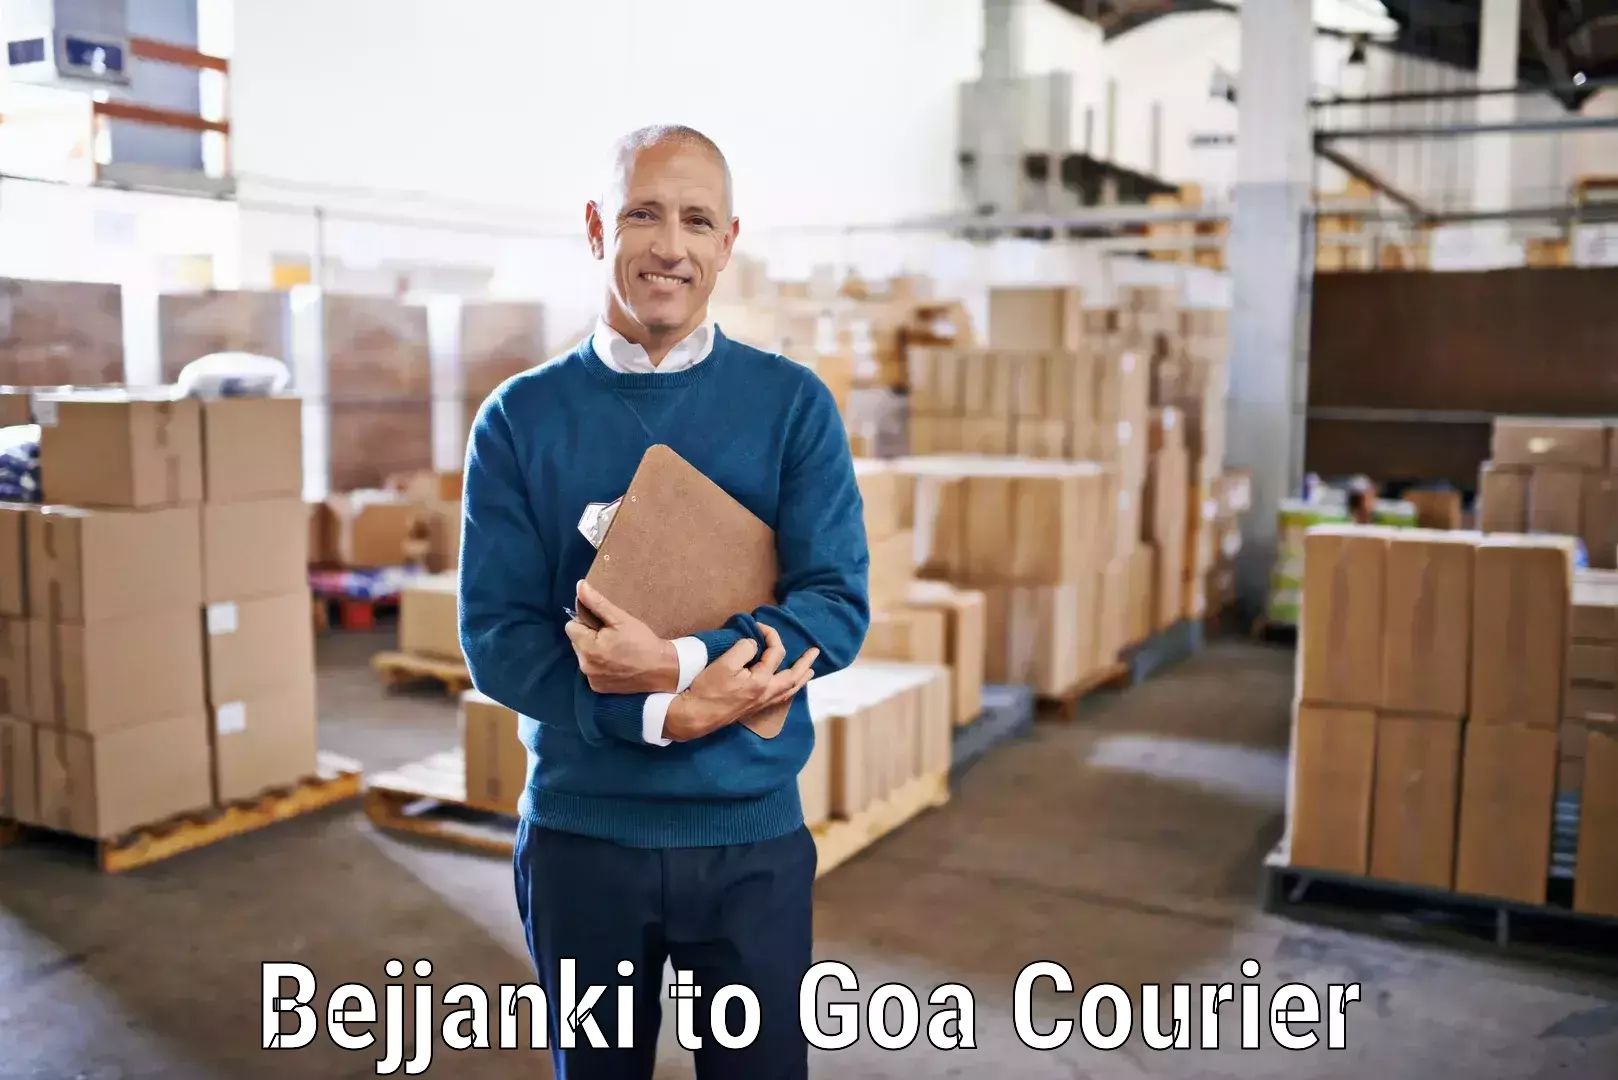 Courier service efficiency Bejjanki to Goa